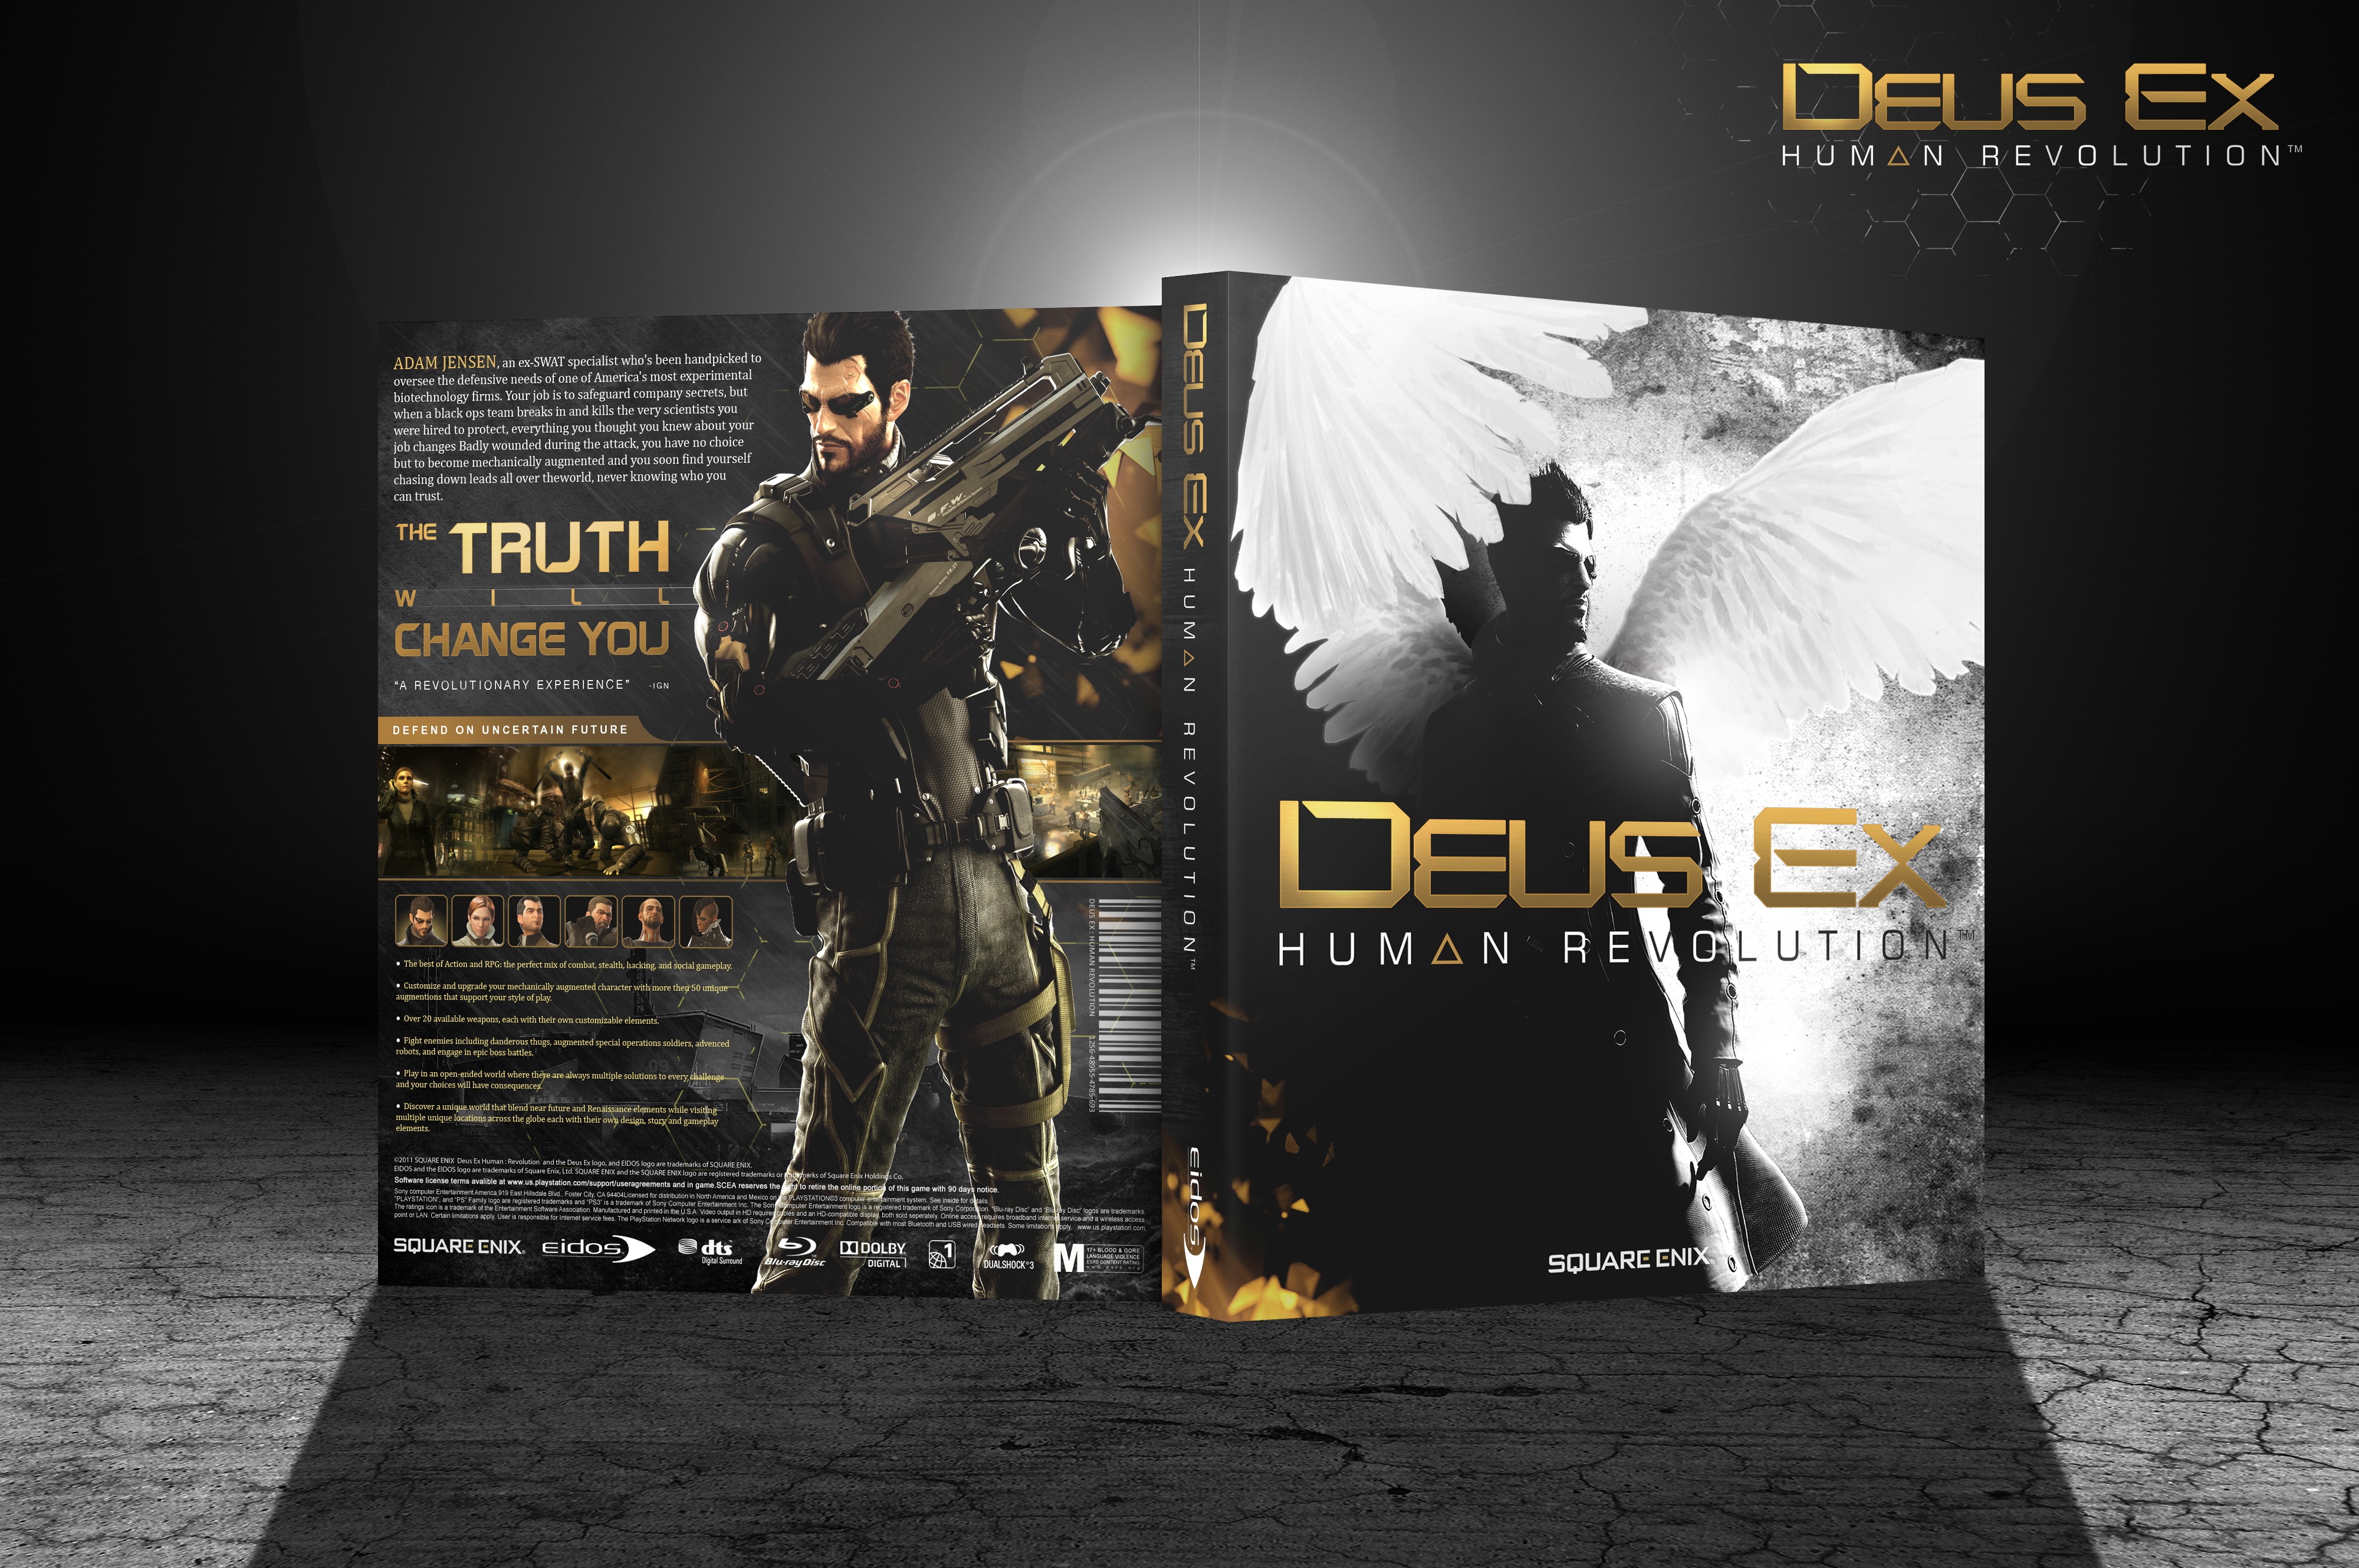 Deus Ex: Human Revolution box cover